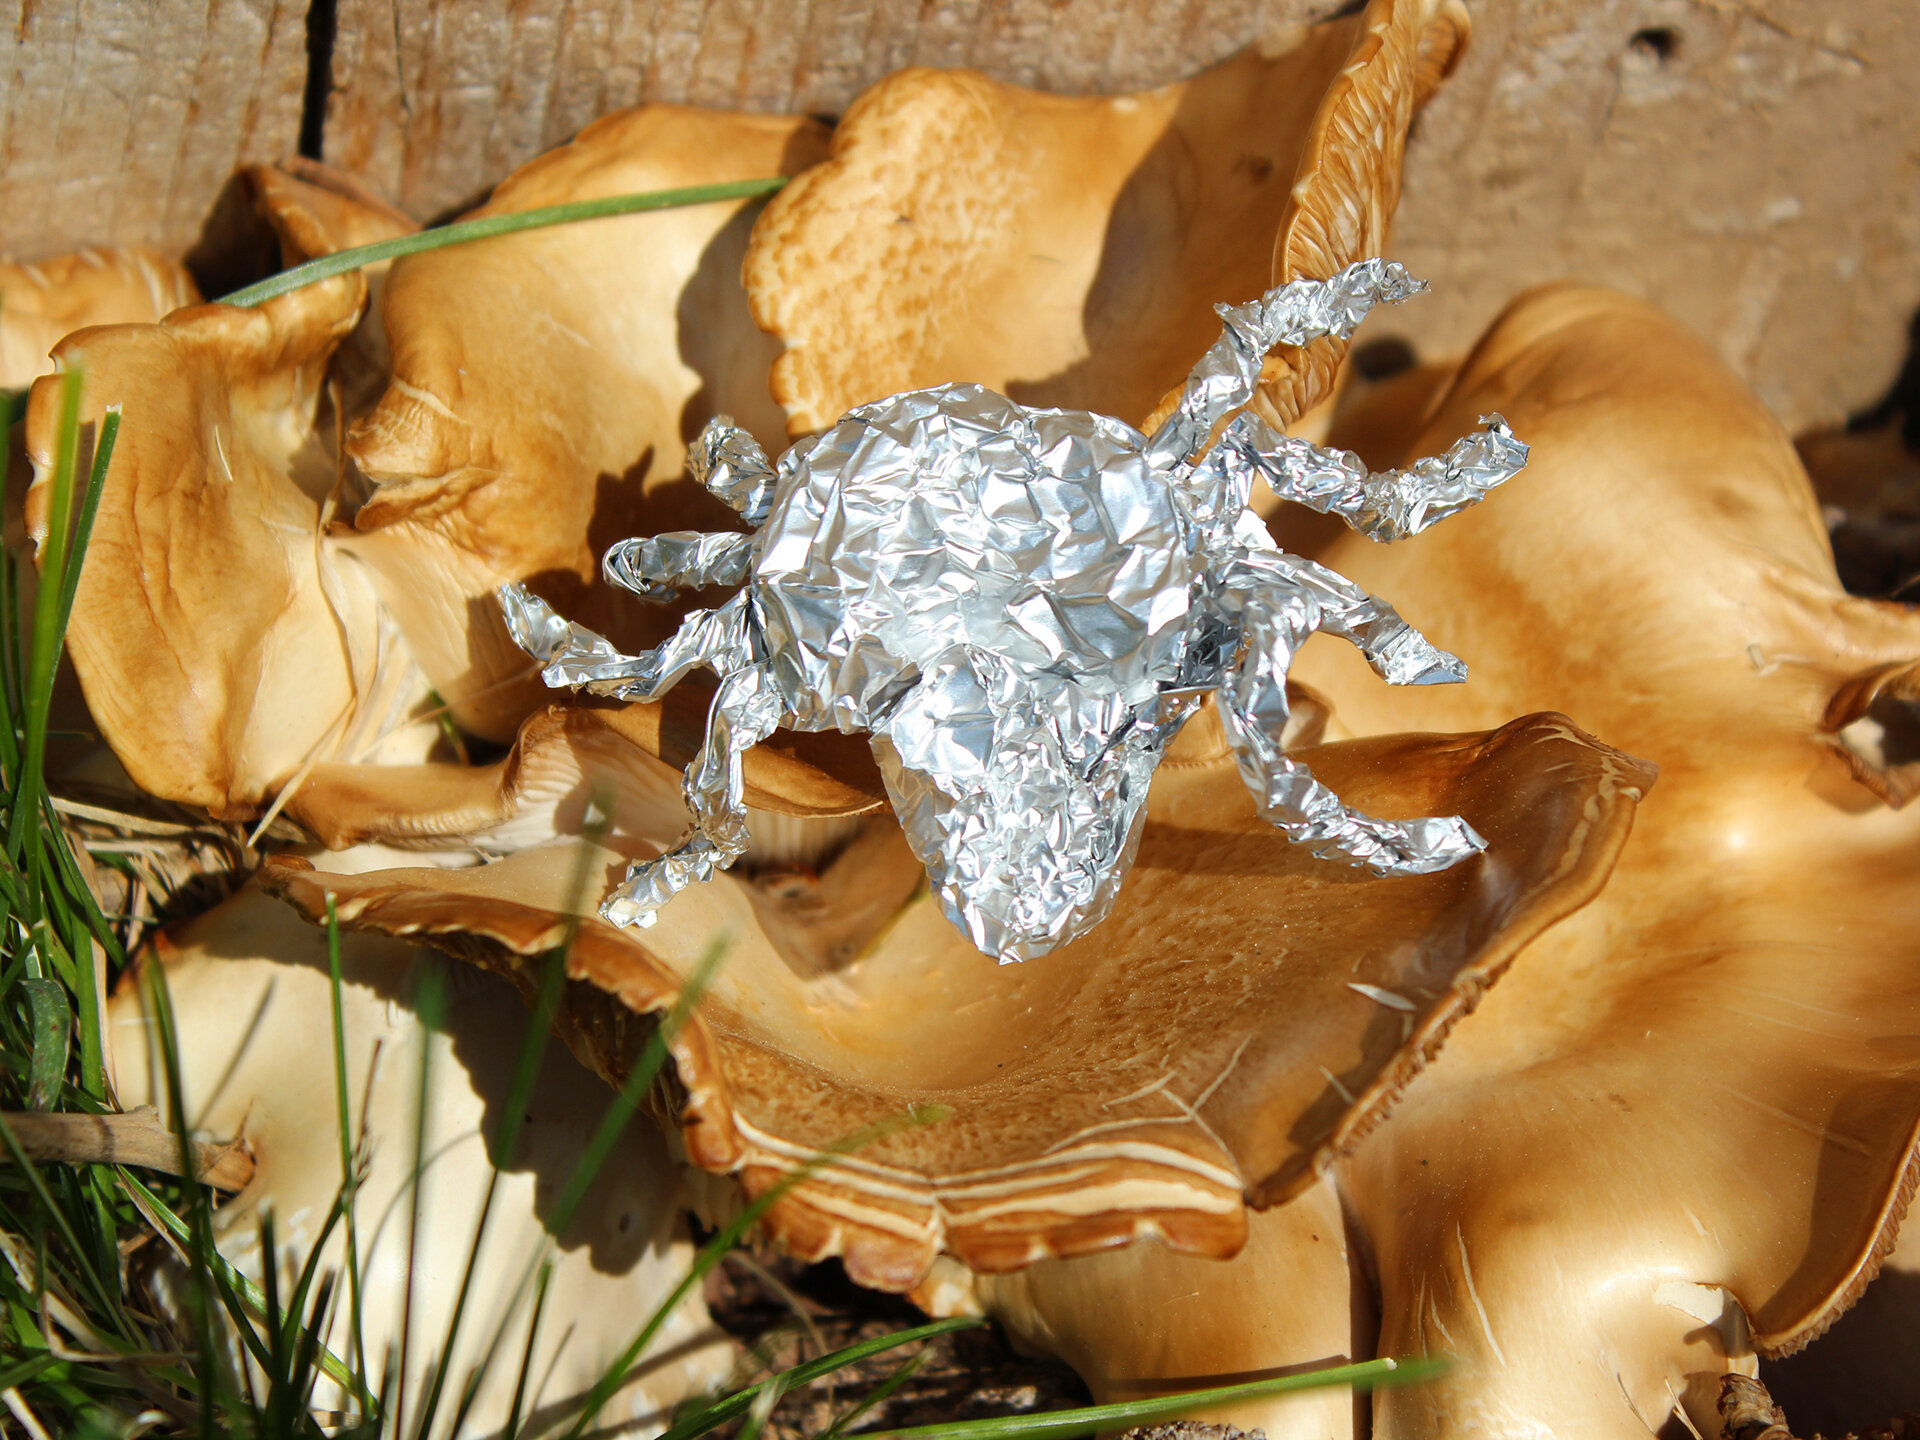 Tin Foil Spider On Mushroom